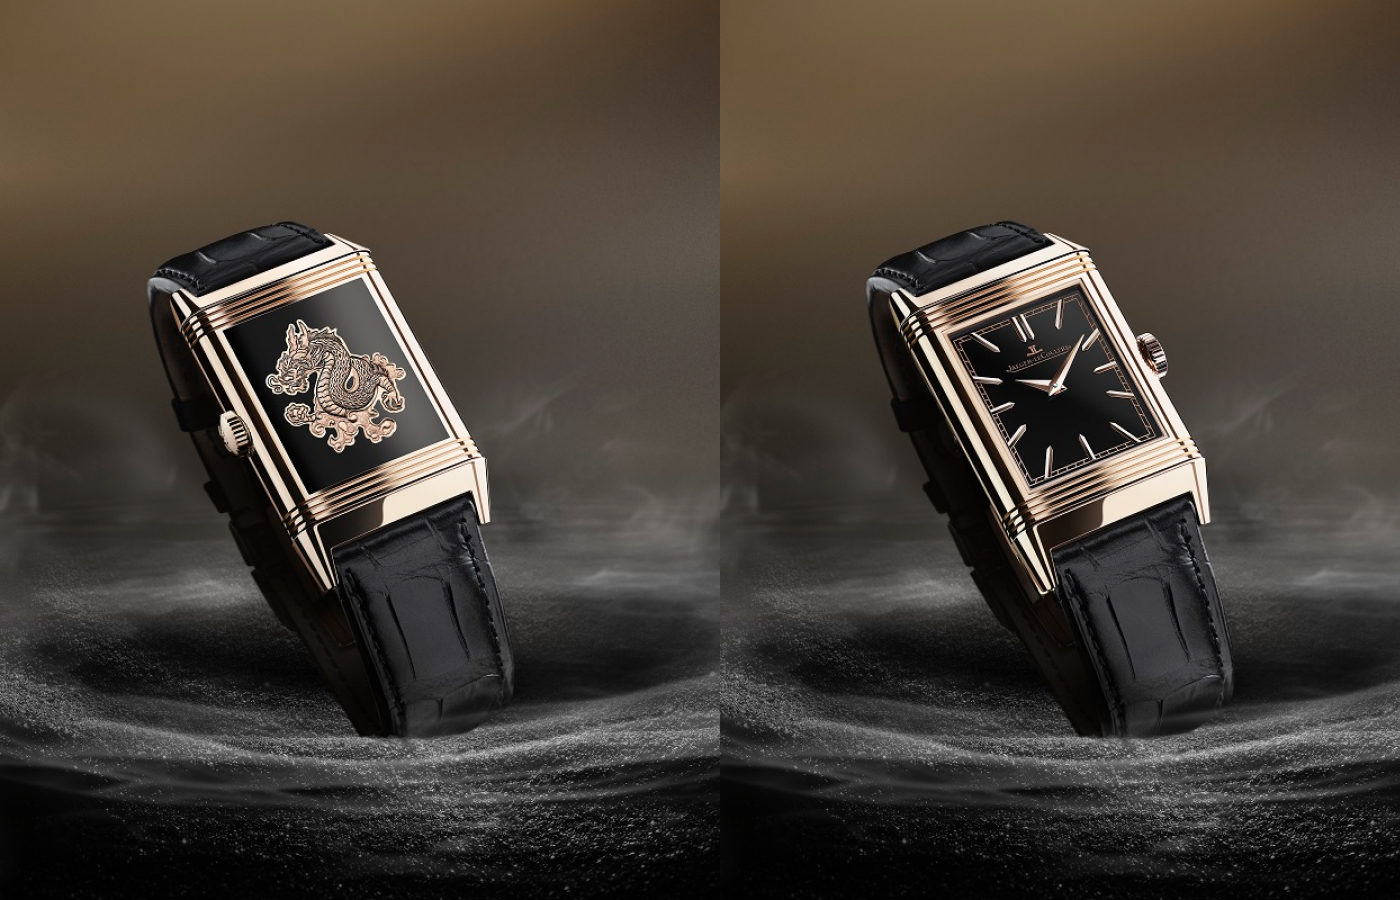 Jaeger-LeCoultre Reverso Tribute Enamel ‘Dragon’ watch in gold and black enamel